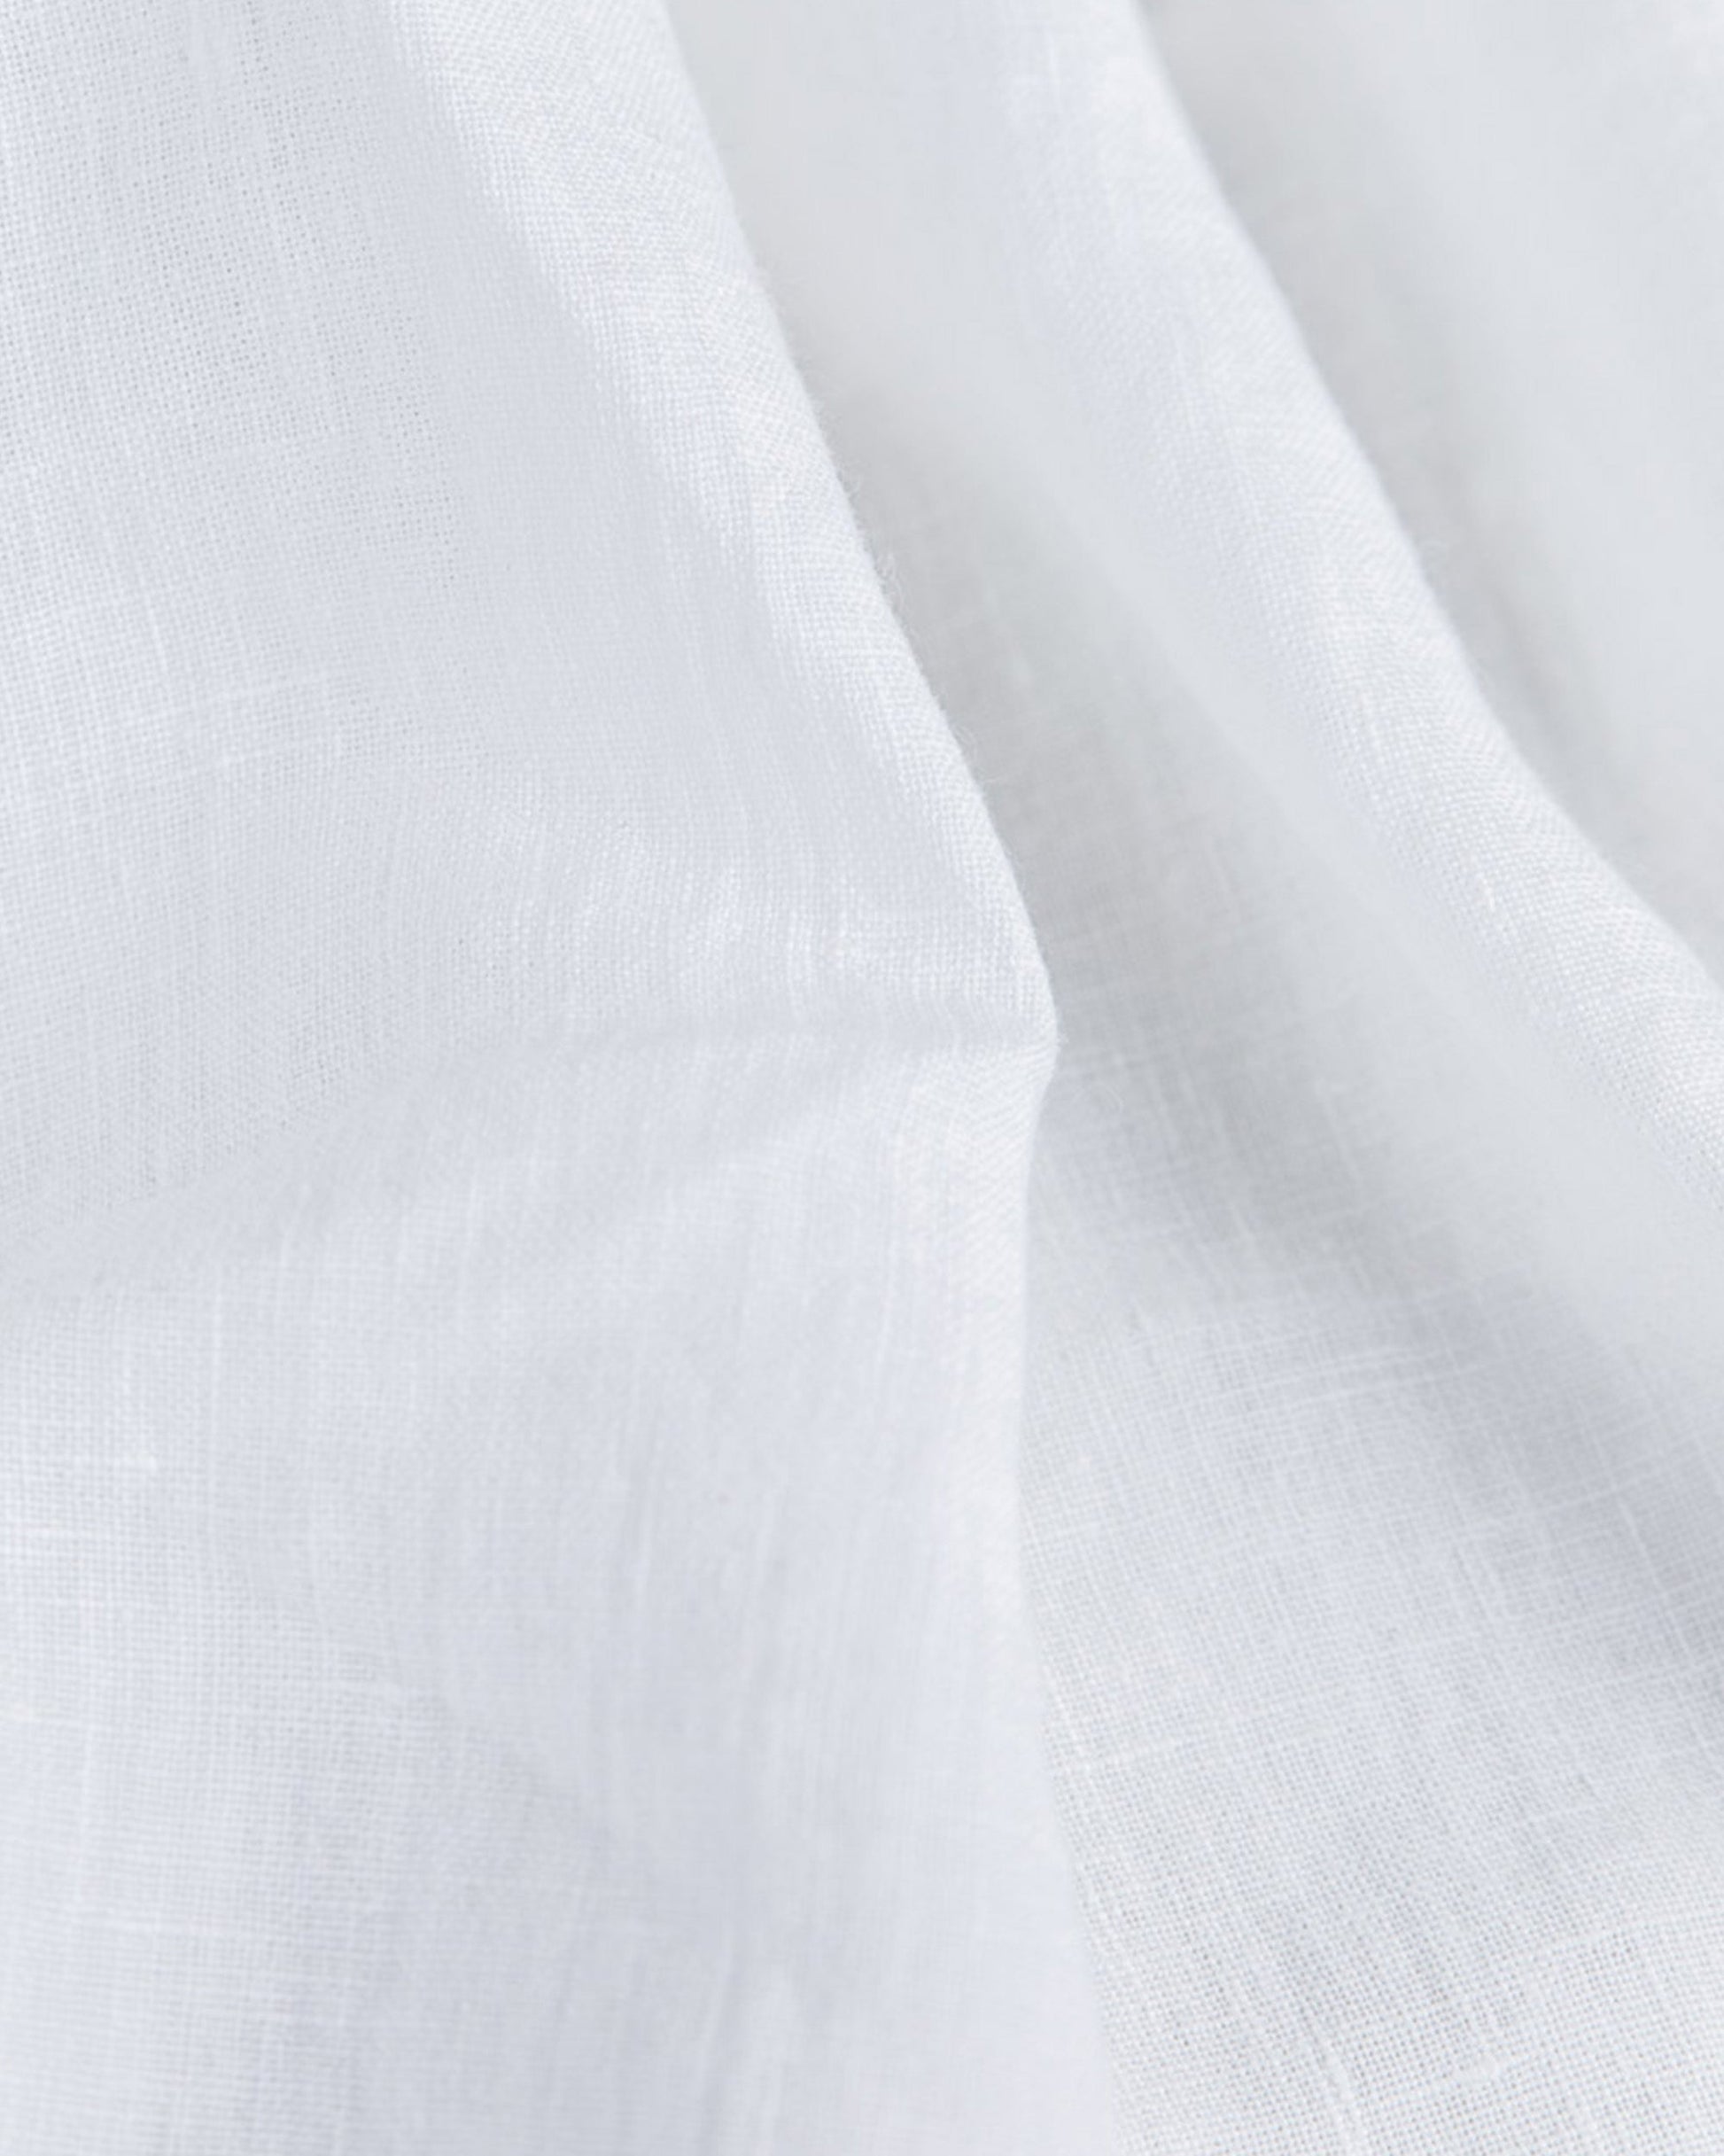 Custom size White linen fitted sheet - MagicLinen